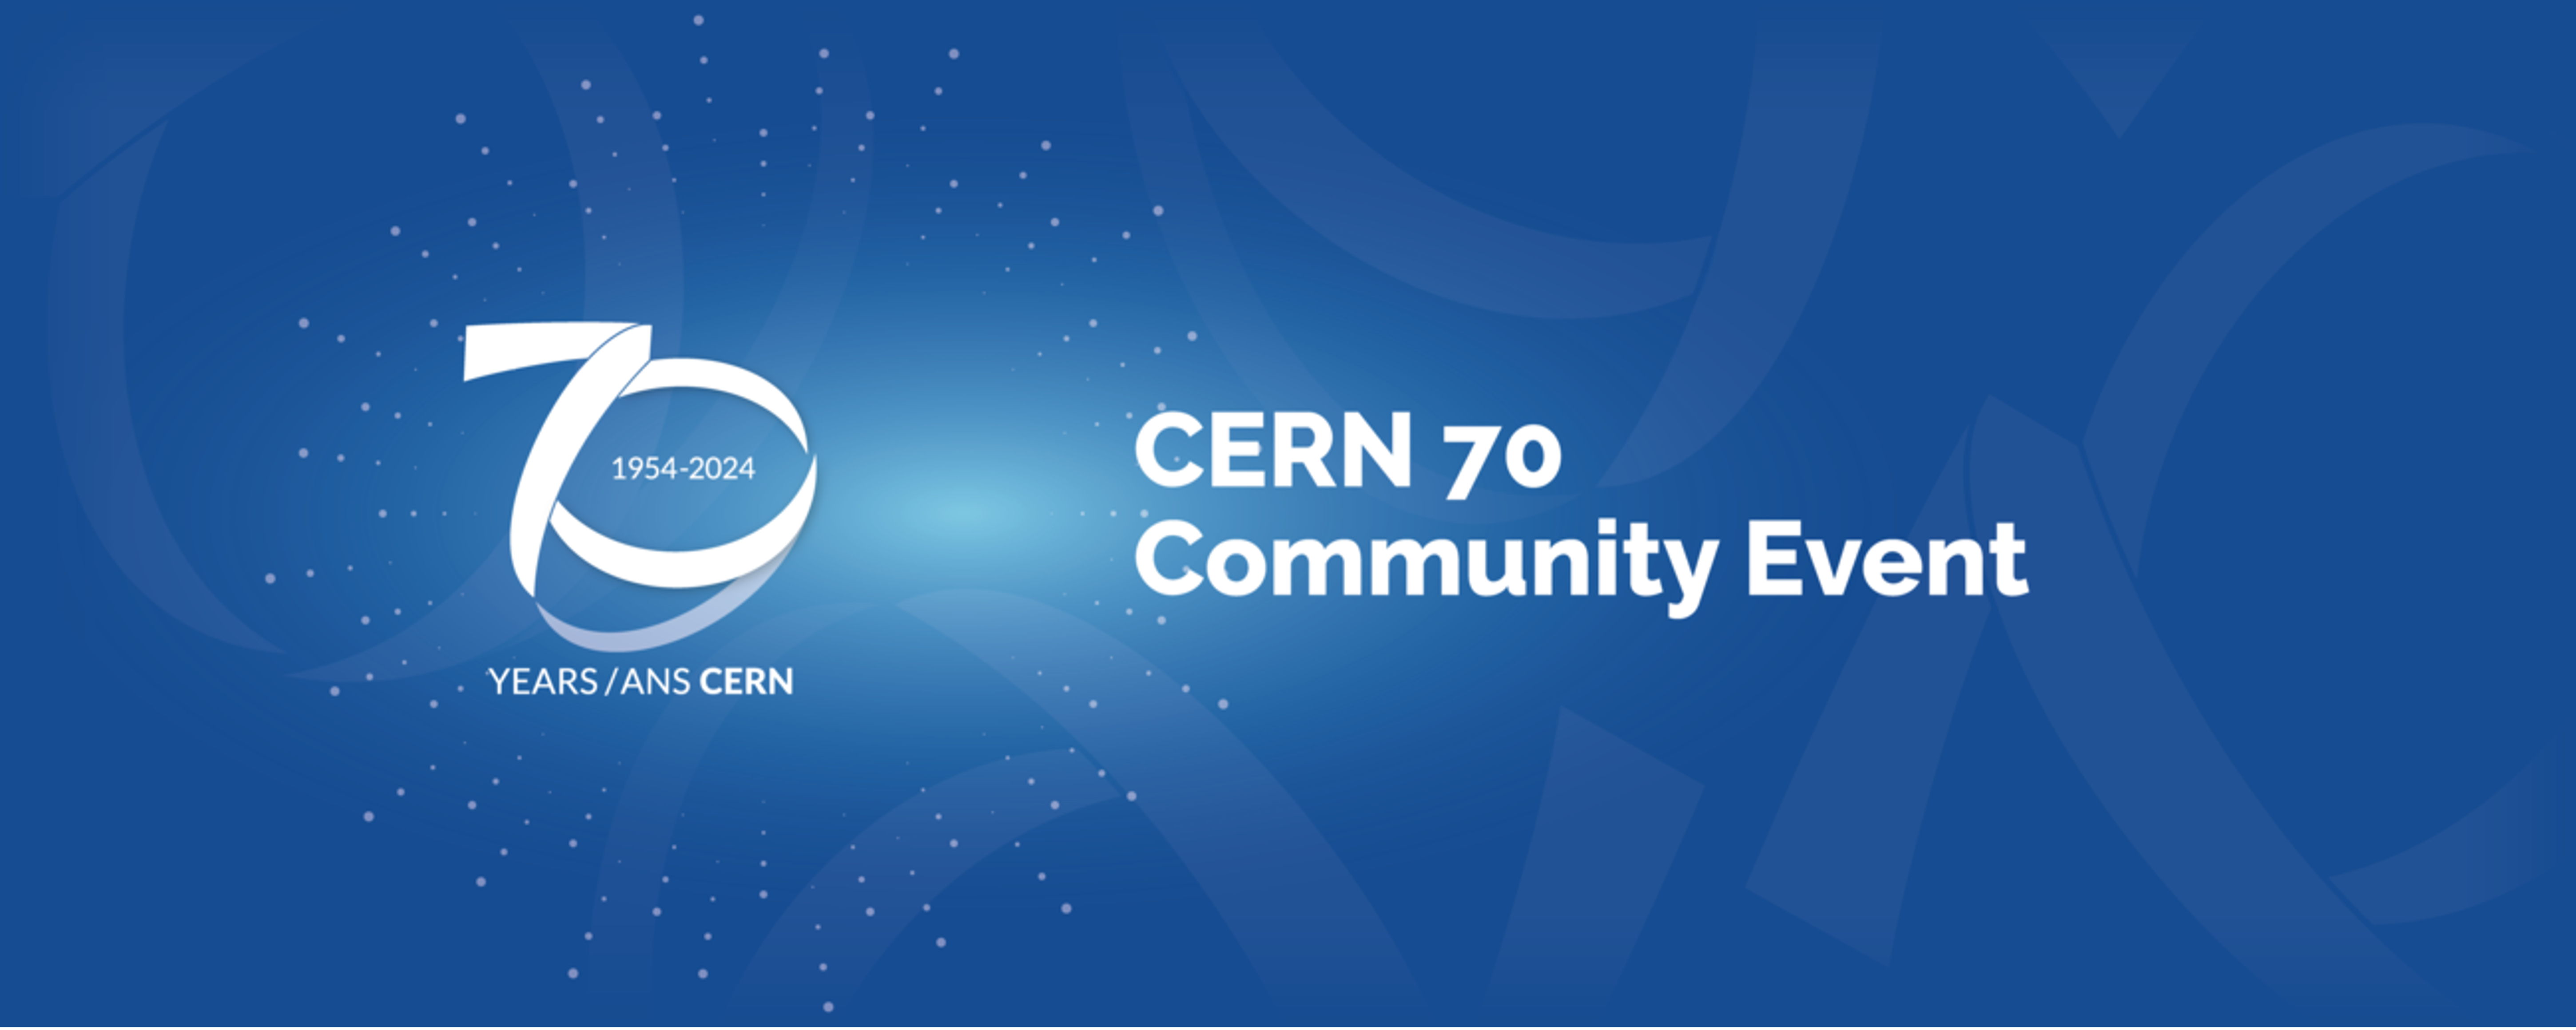 CERN70-community-event